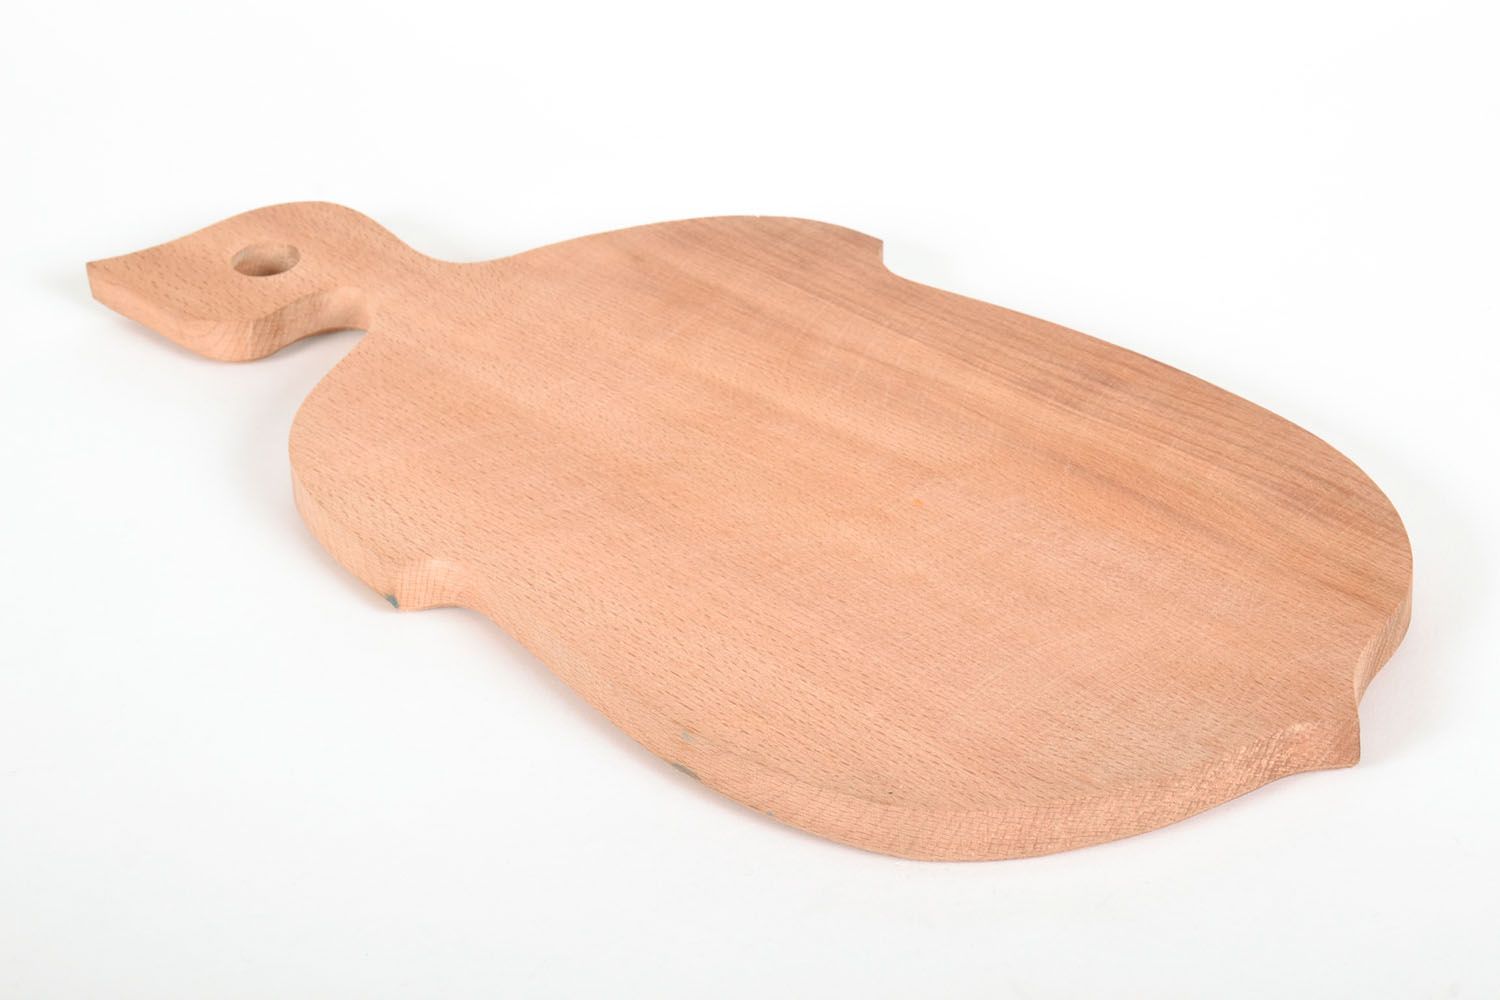 Wooden cutting board photo 3